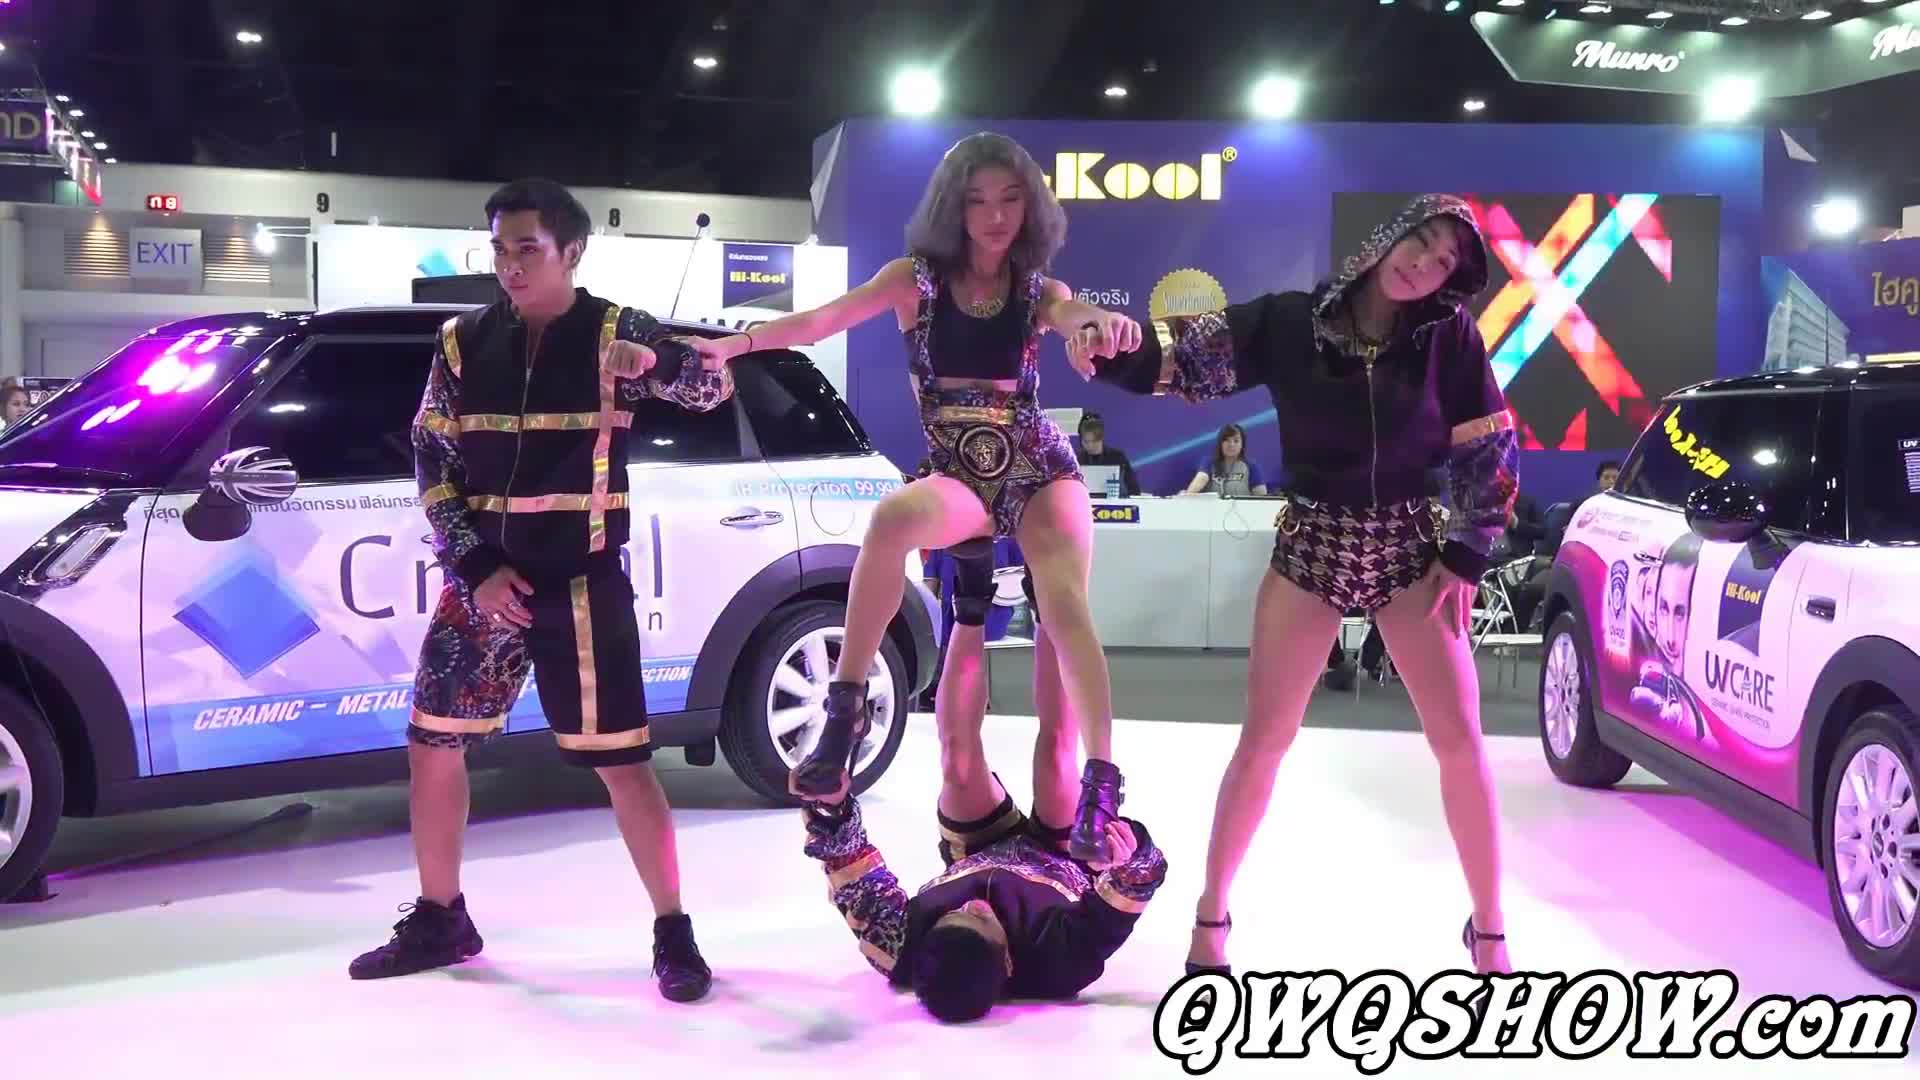 【Bangkok Motor Show 2018】HI-KOOl Dance Show